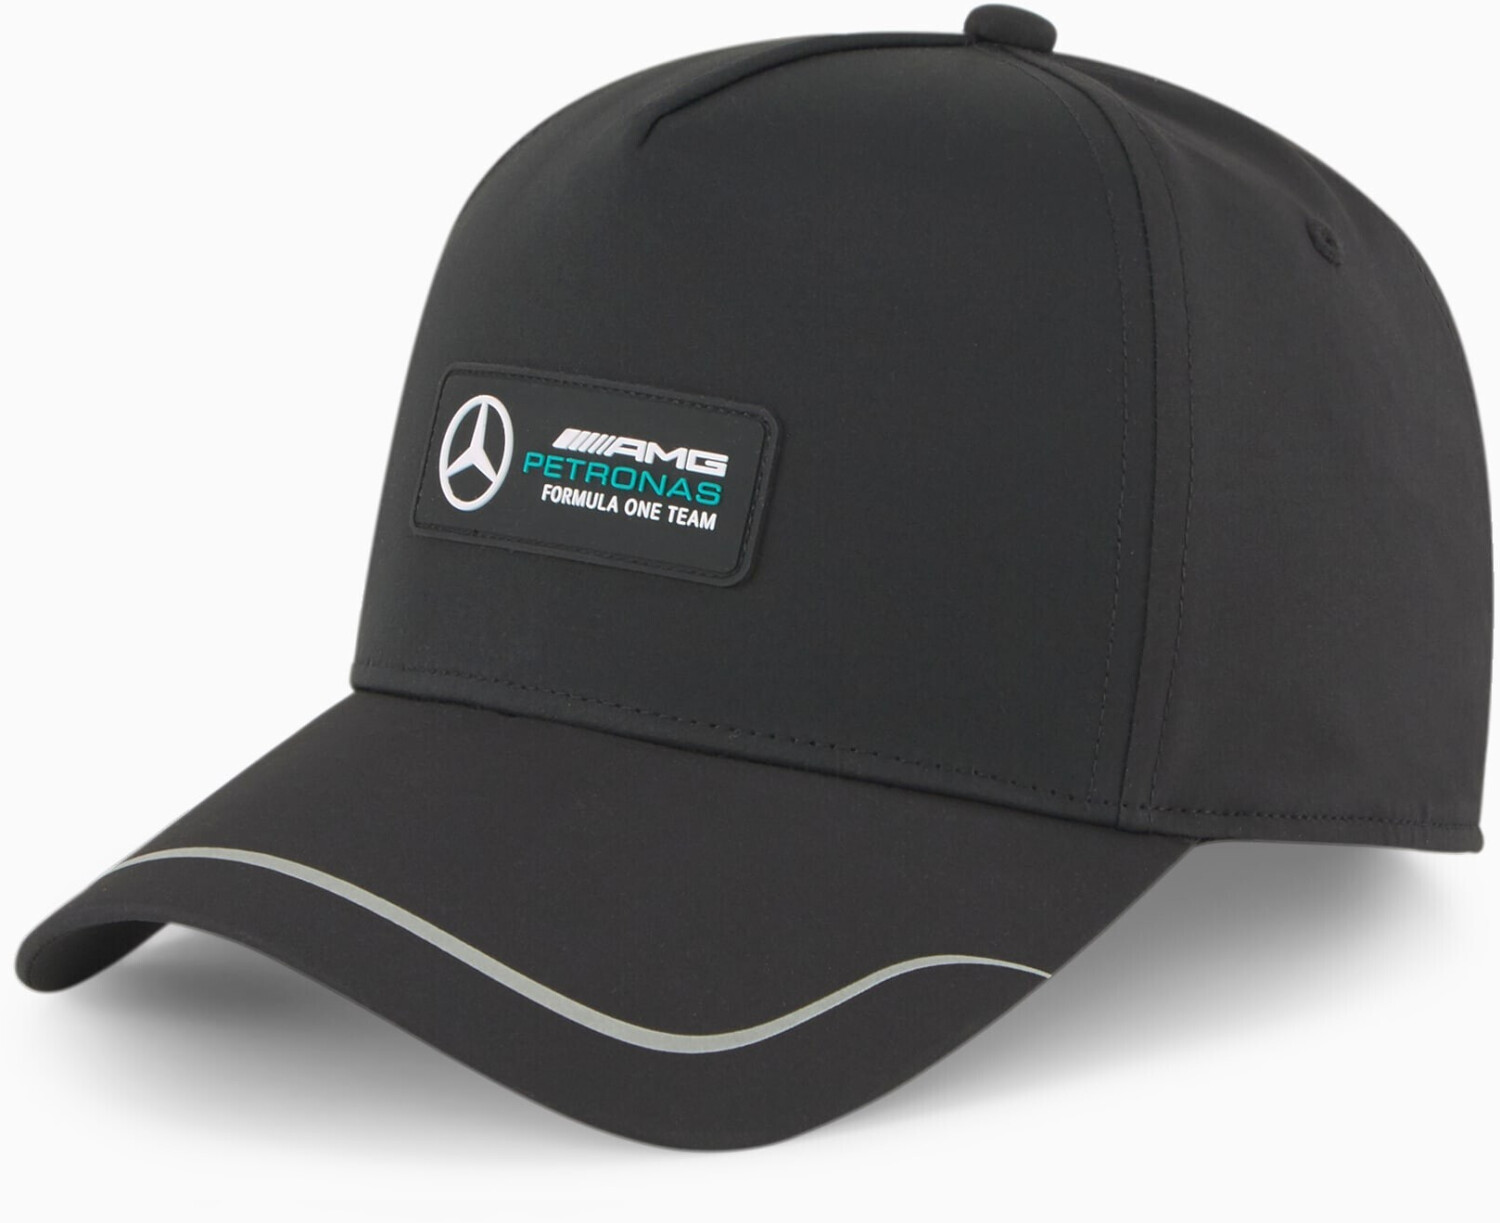 19,99 Preisvergleich Mercedes-Amg Motorsport bei (24485) Petronas ab Cap black € Puma |